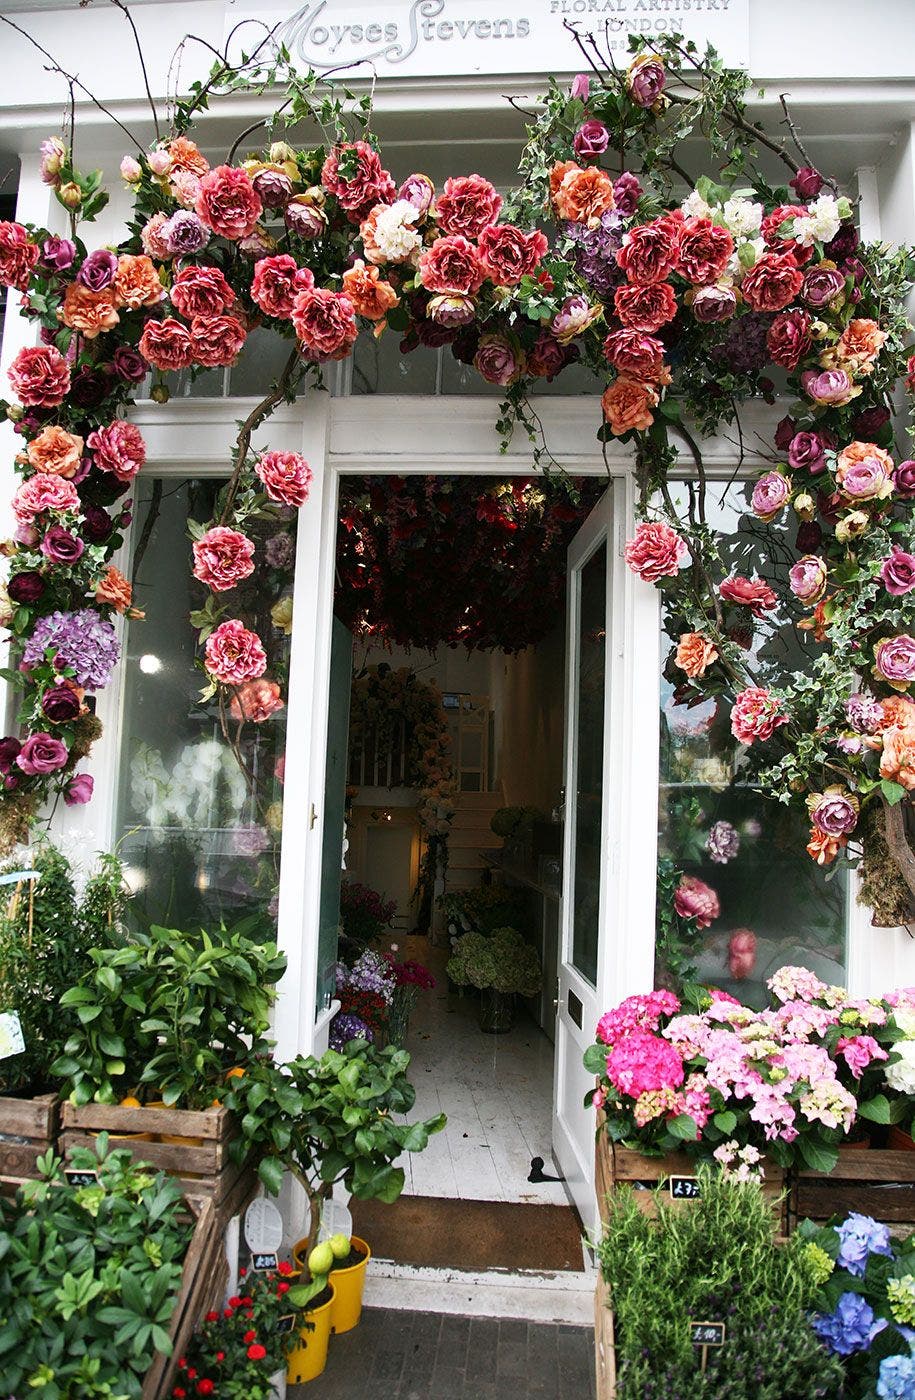 La exclusiva tienda de flores Moyses Stevens. Foto Manena Munar.